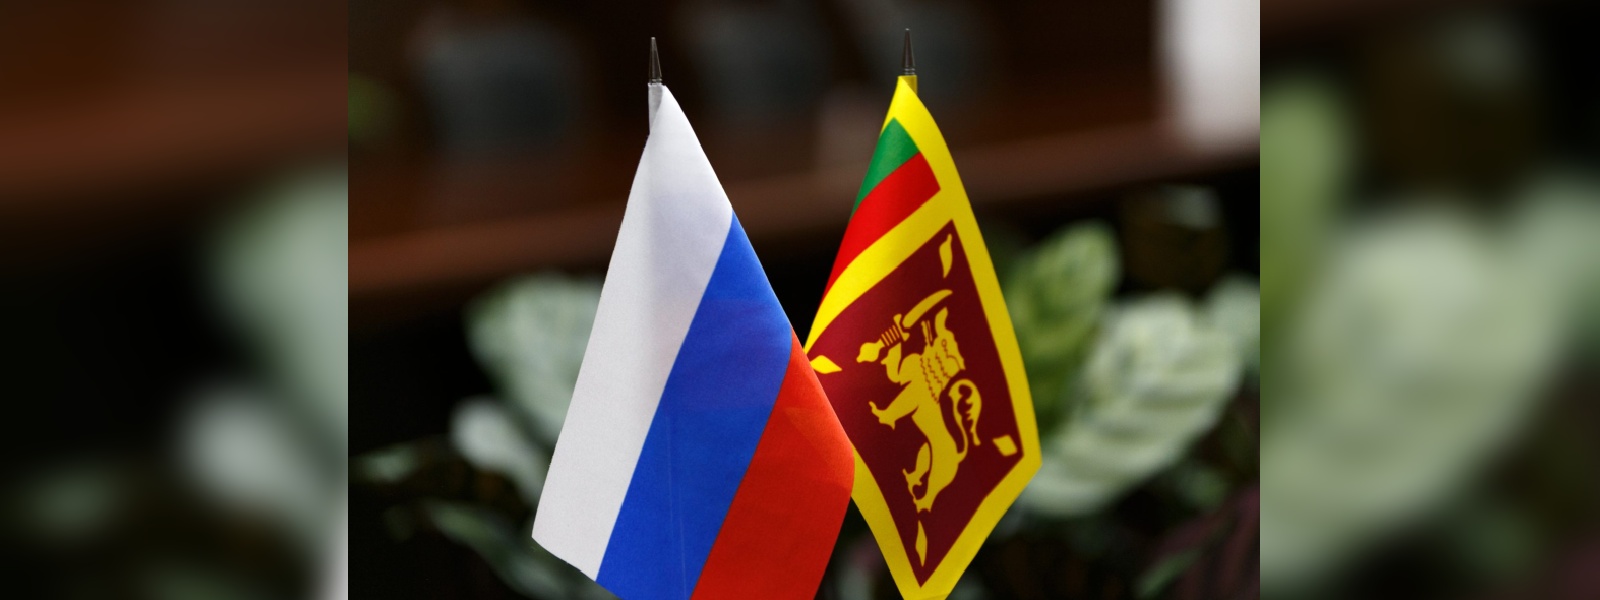 Sri Lanka & Russia commemorates 65 years since establishment of diplomatic relations